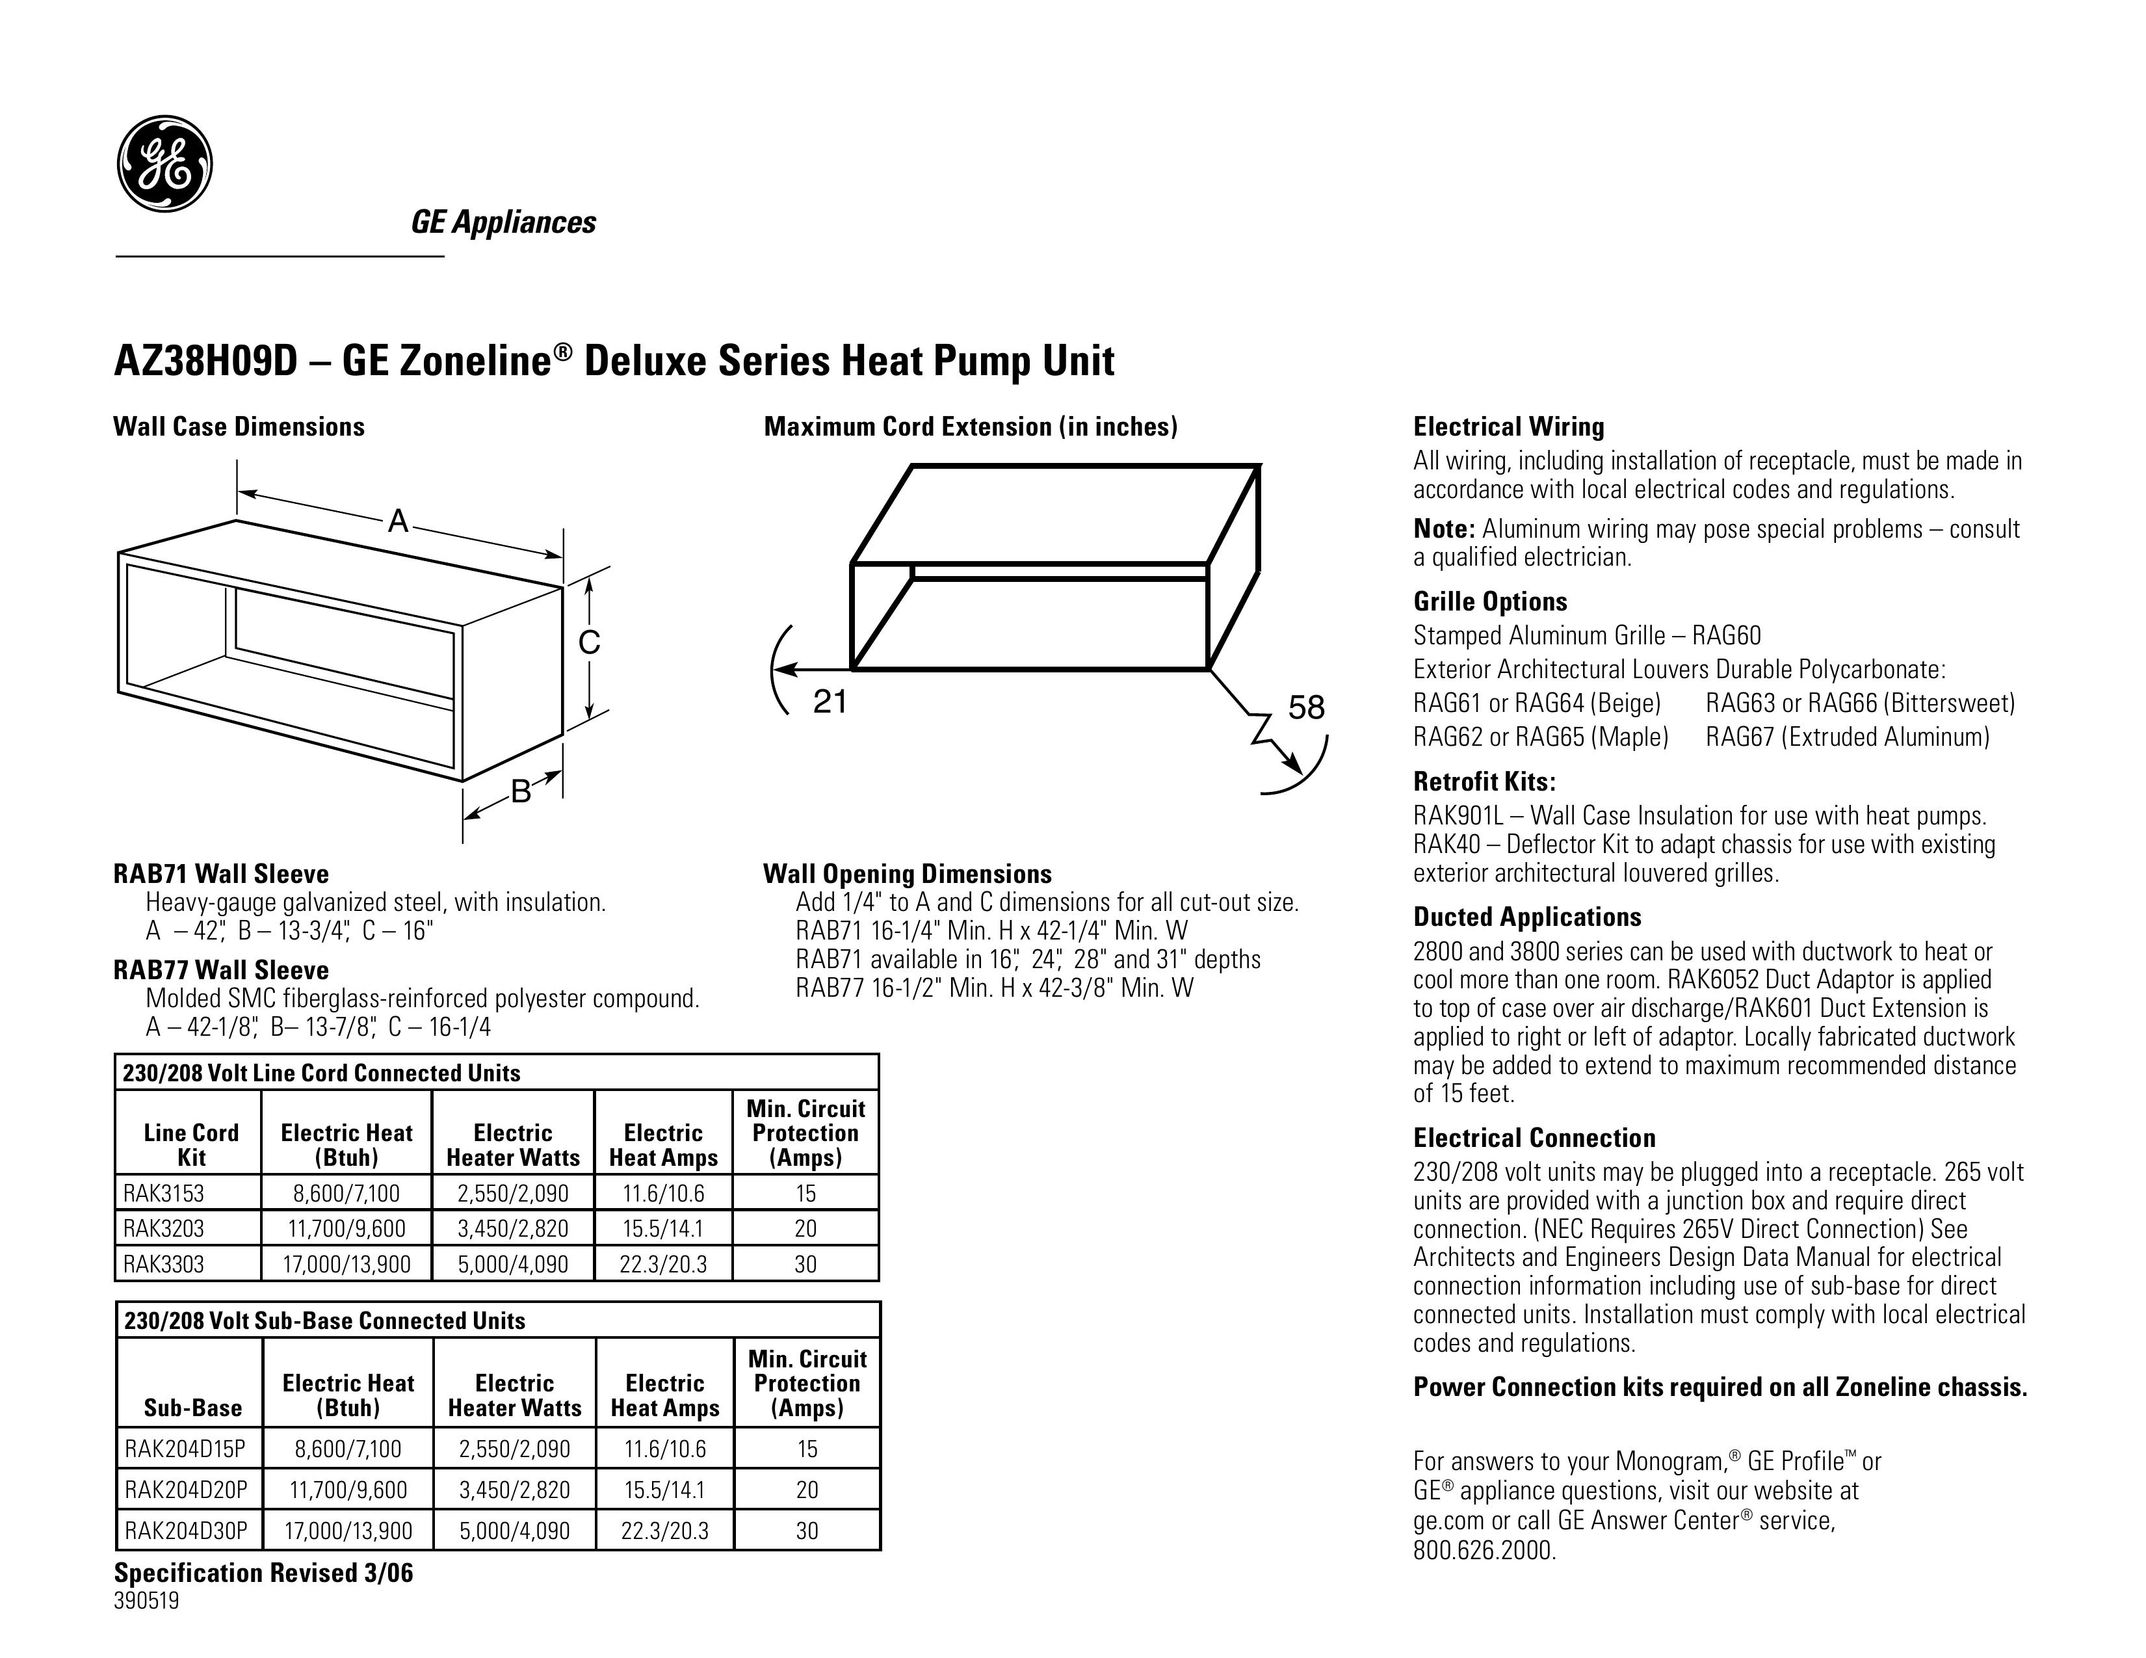 GE AZ38H09DAC Heat Pump User Manual